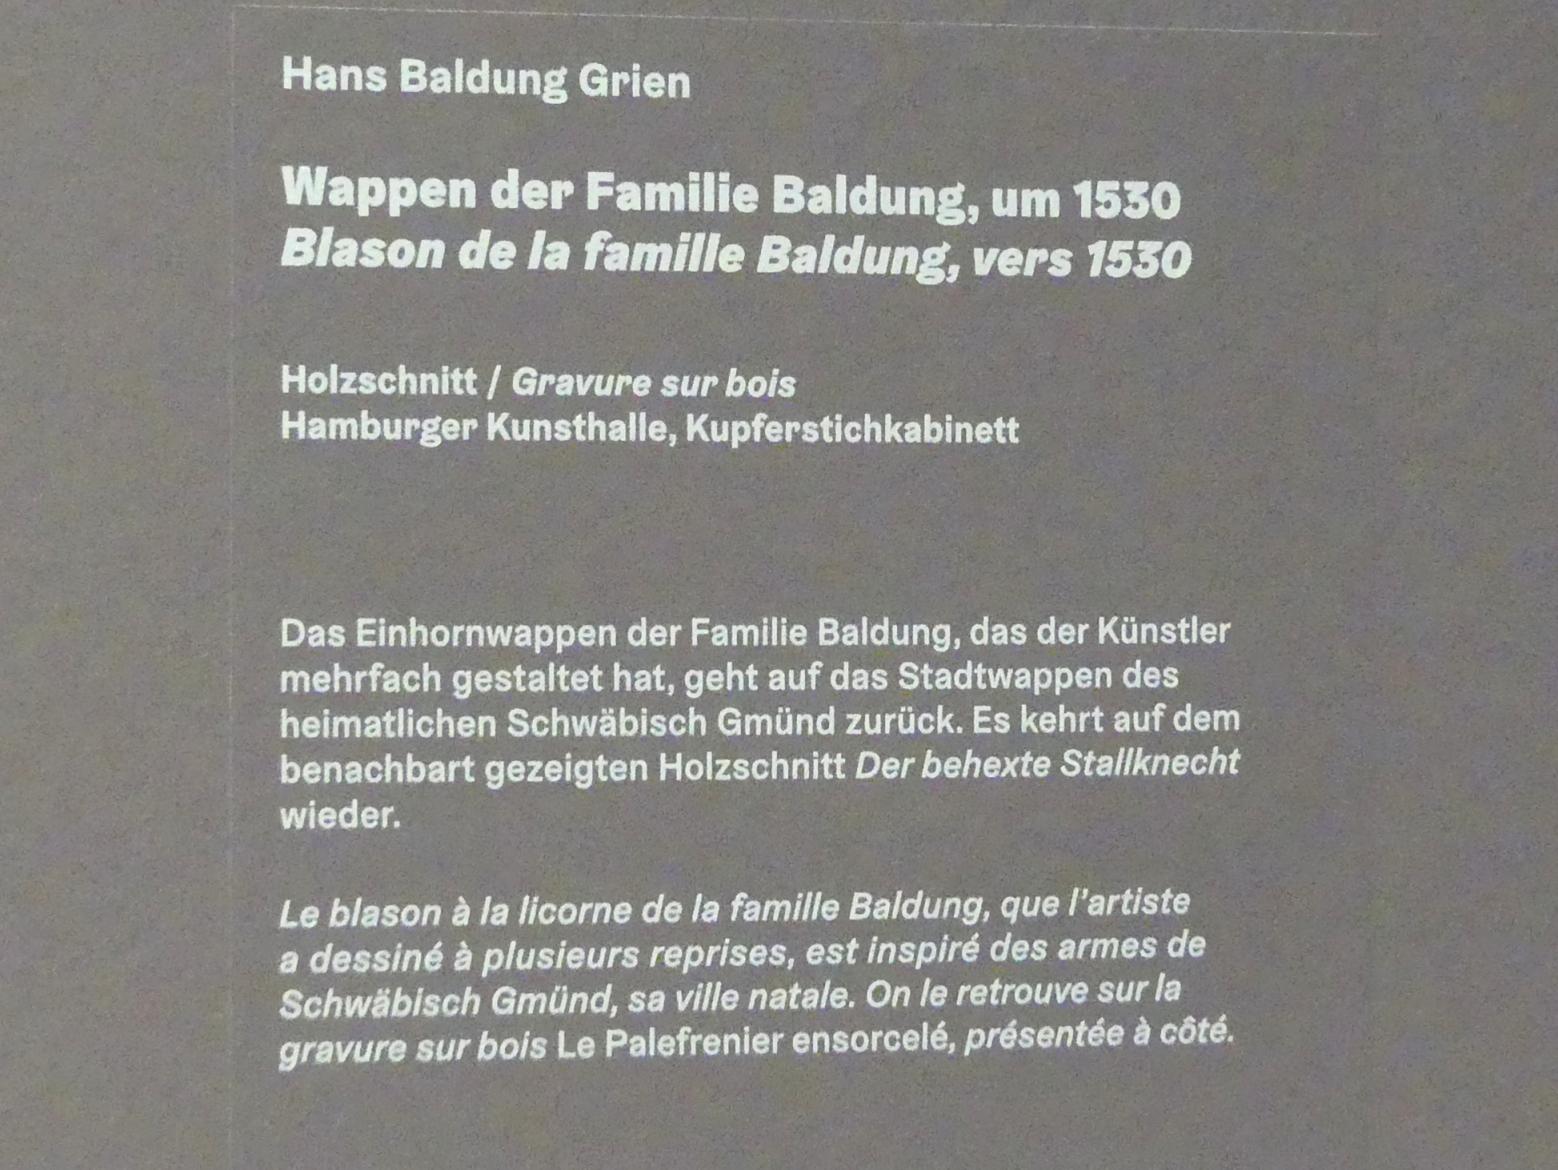 Hans Baldung Grien (1500–1544), Wappen der Familie Baldung, Karlsruhe, Staatliche Kunsthalle, Ausstellung "Hans Baldung Grien, heilig | unheilig", Saal 13, um 1530, Bild 3/3